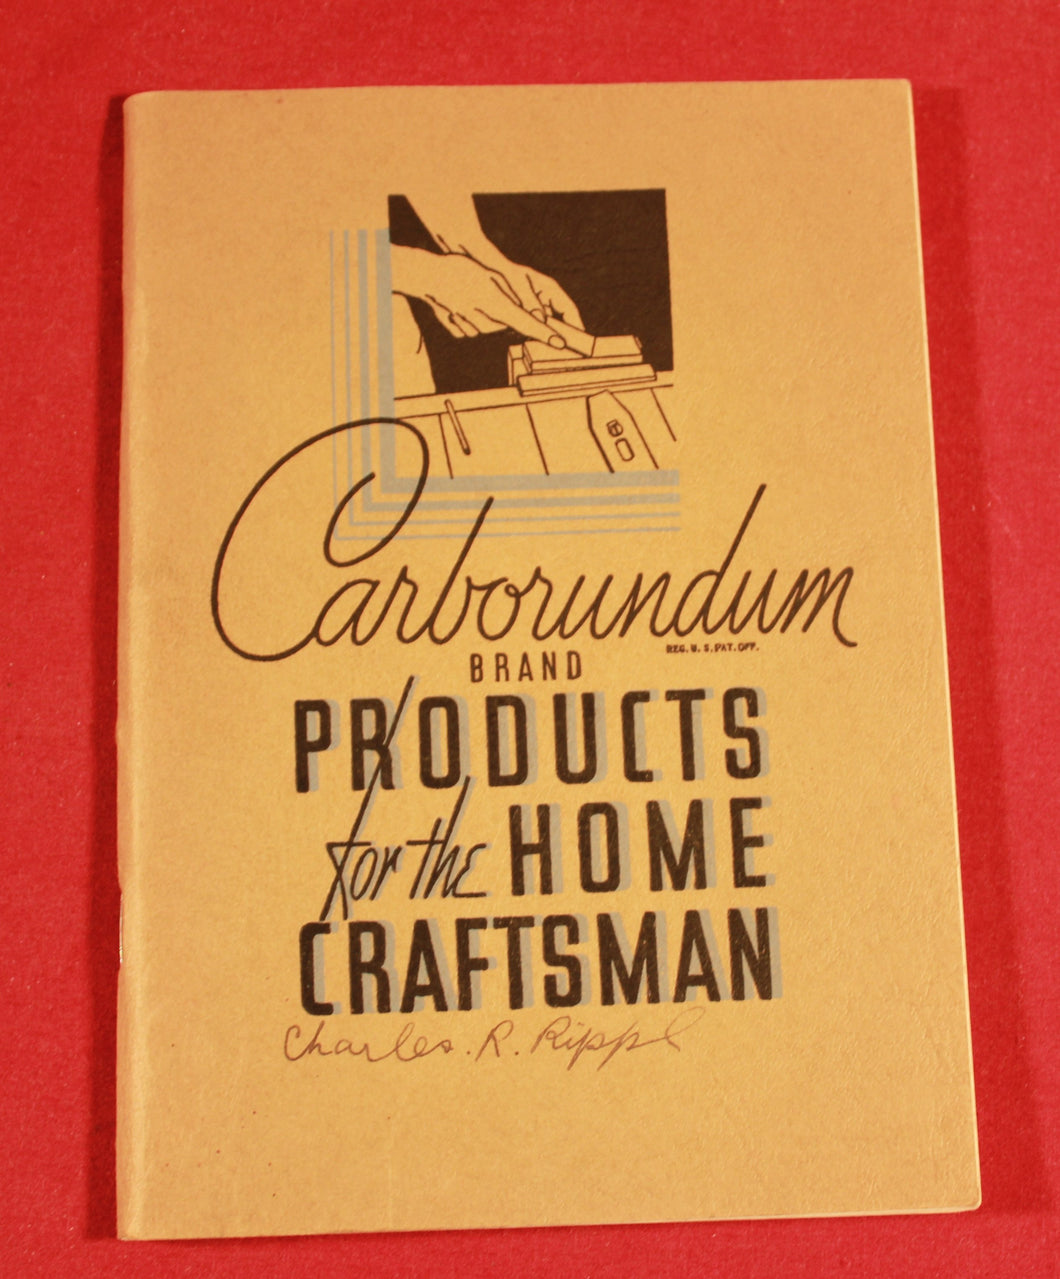 Vintage & Original 1935 CARBORUNDUM Brand Products for the Home Craftsman Booklet